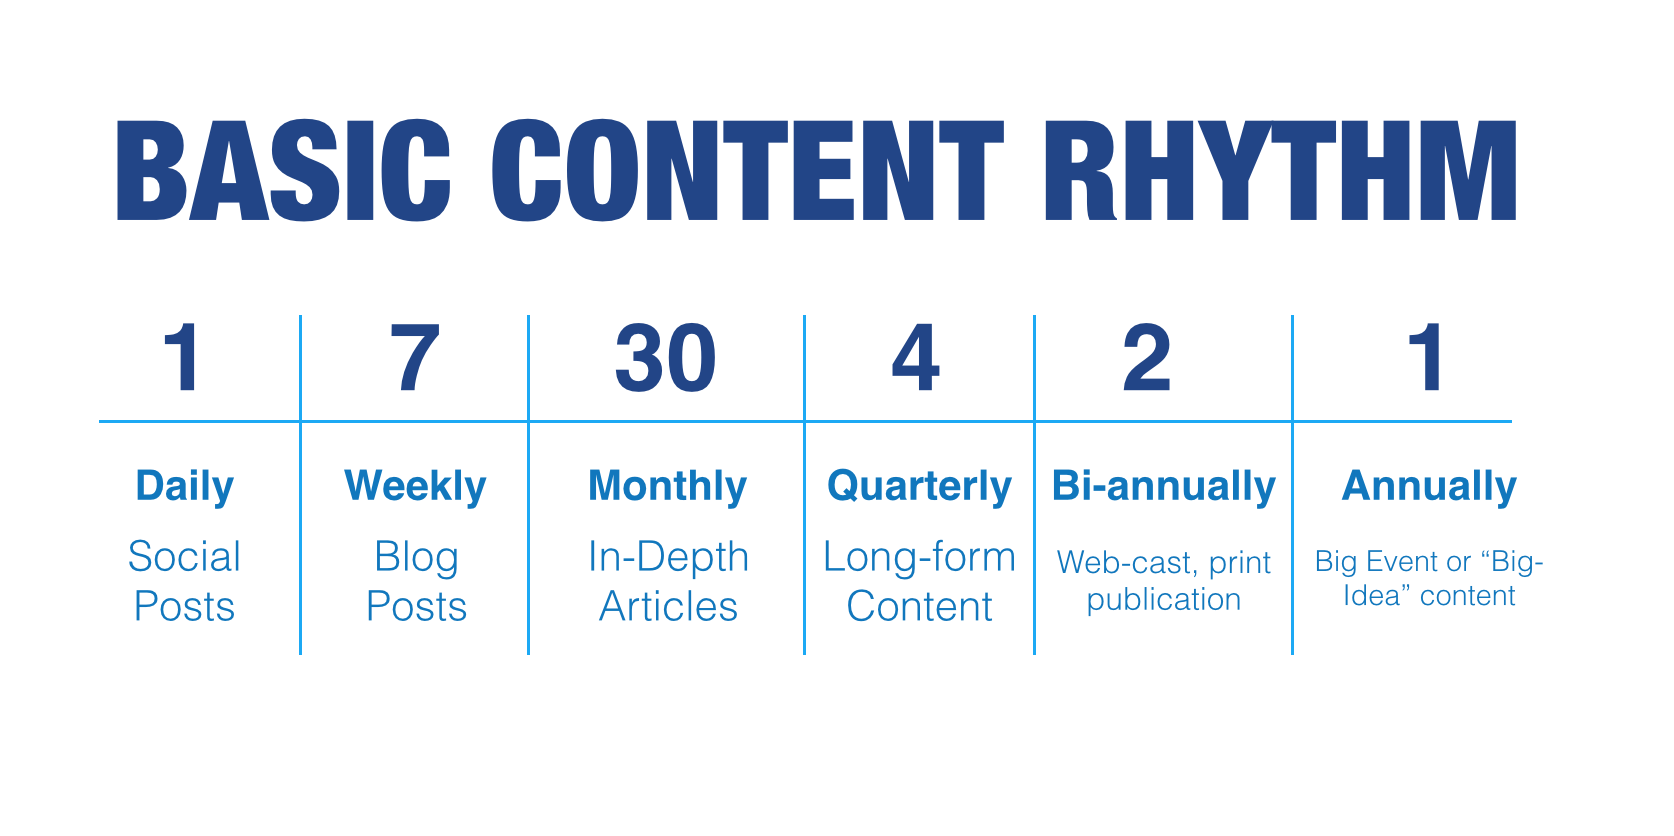 Basic Content Rhythm